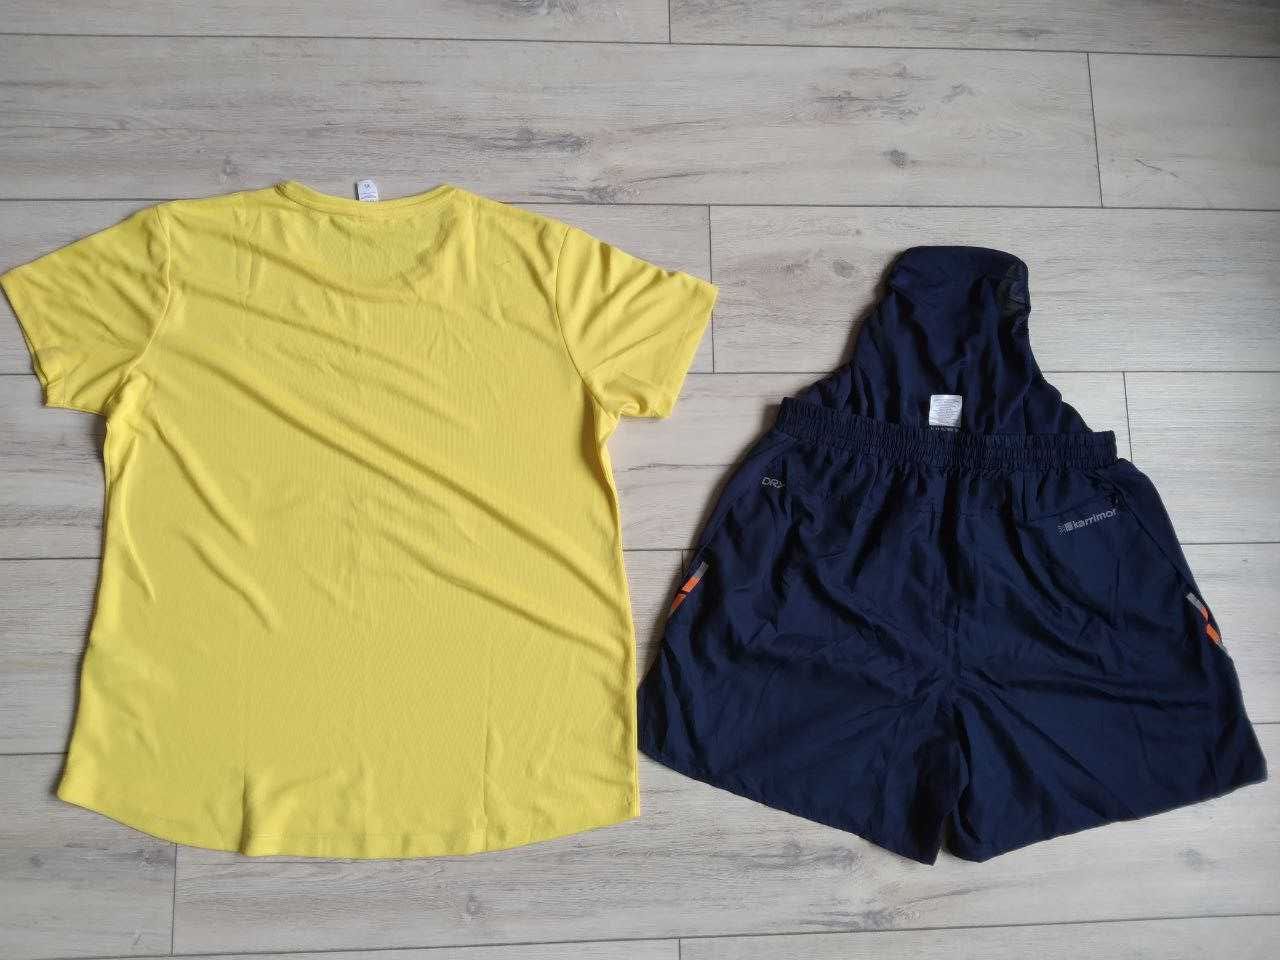 Шорти біг Nike UA Karrimor X-Lite XL + футболка RUN FOR UKRAINE L